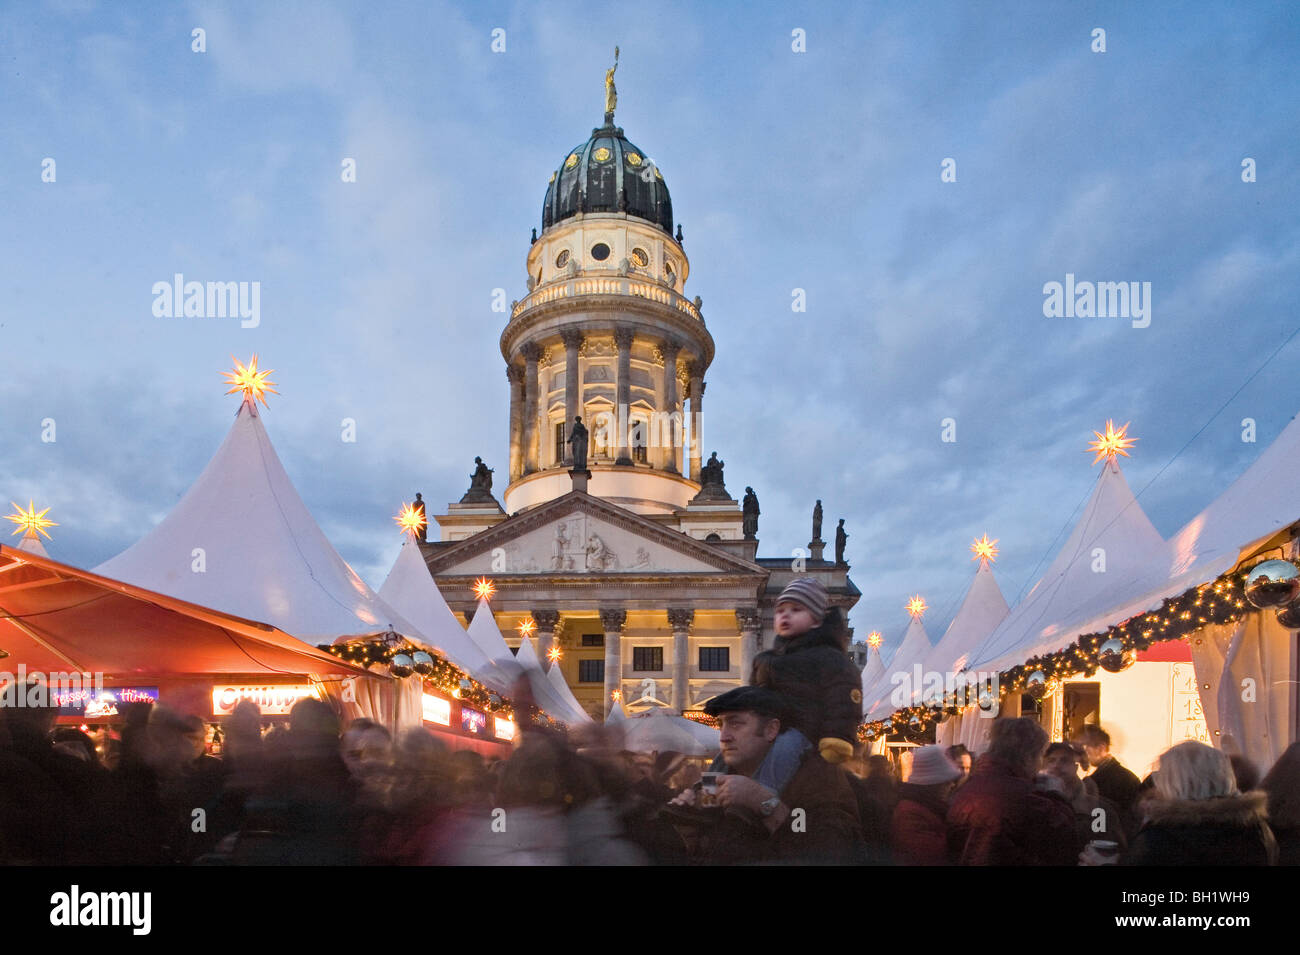 Christmas market, Deutscher Dom, Gendarmenmarkt, at night, Berlin, Germany Stock Photo